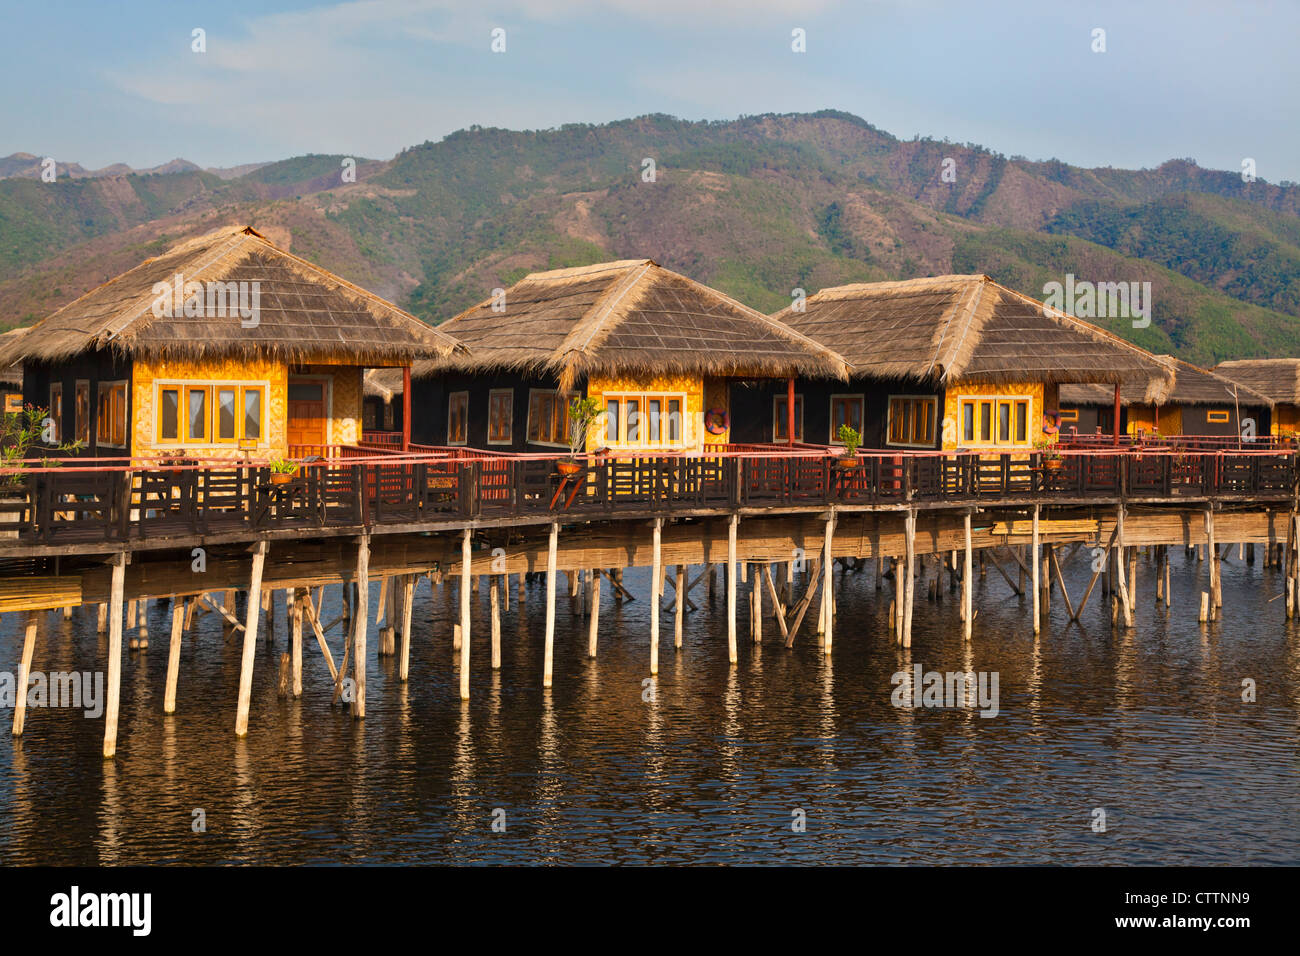 SKY LAKE RESORT consists of individual bungalos built on stilts on INLE LAKE - MYANMAR Stock Photo